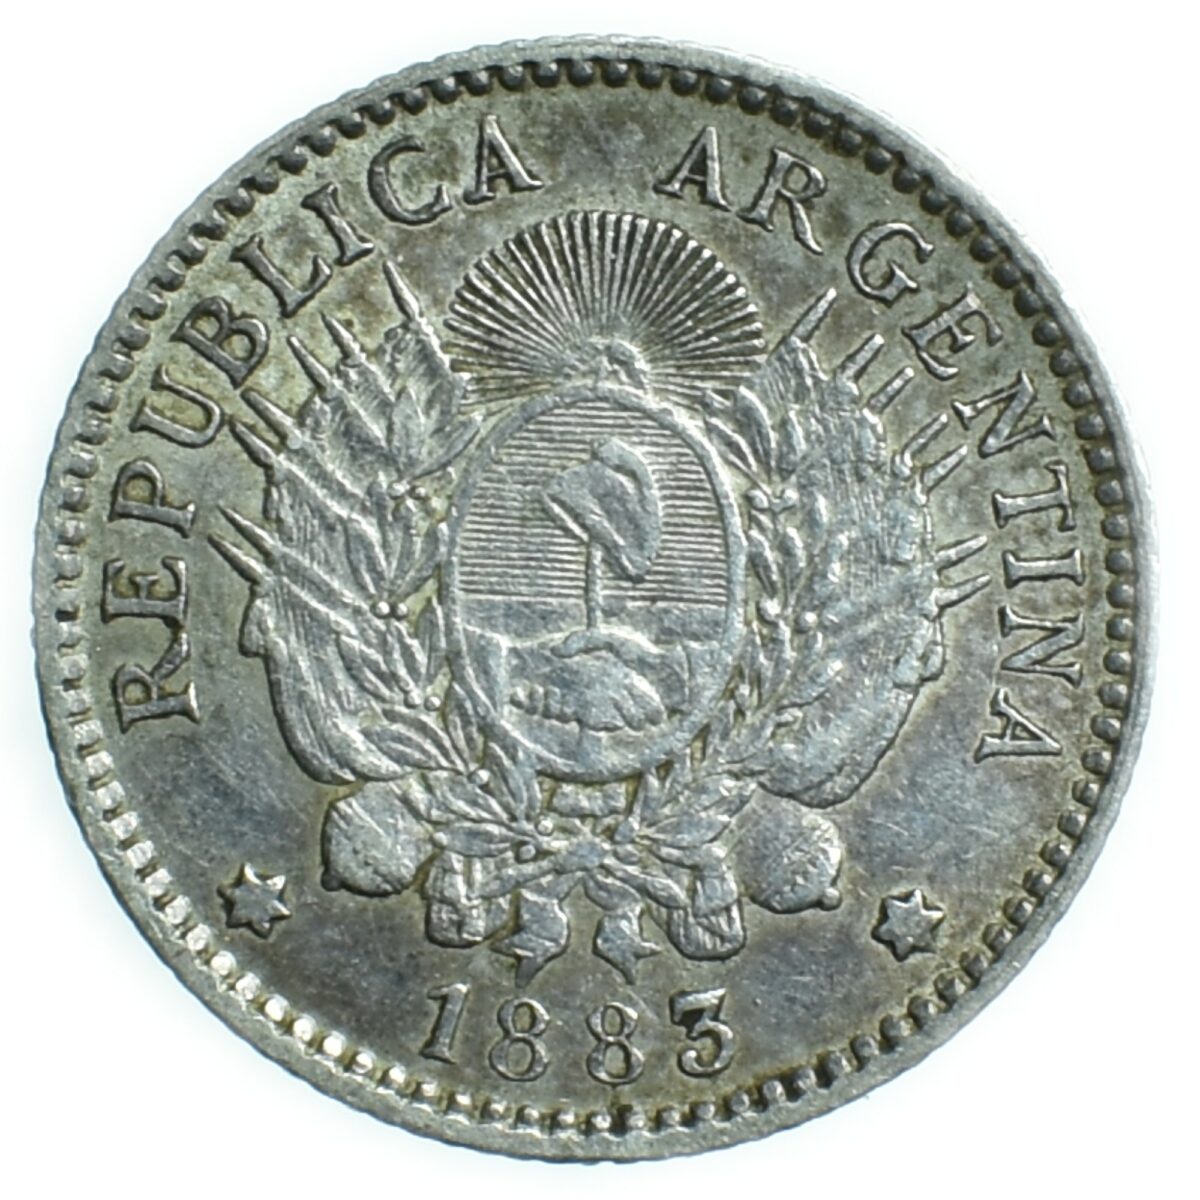 10 centavos 1883 argentine avers 55